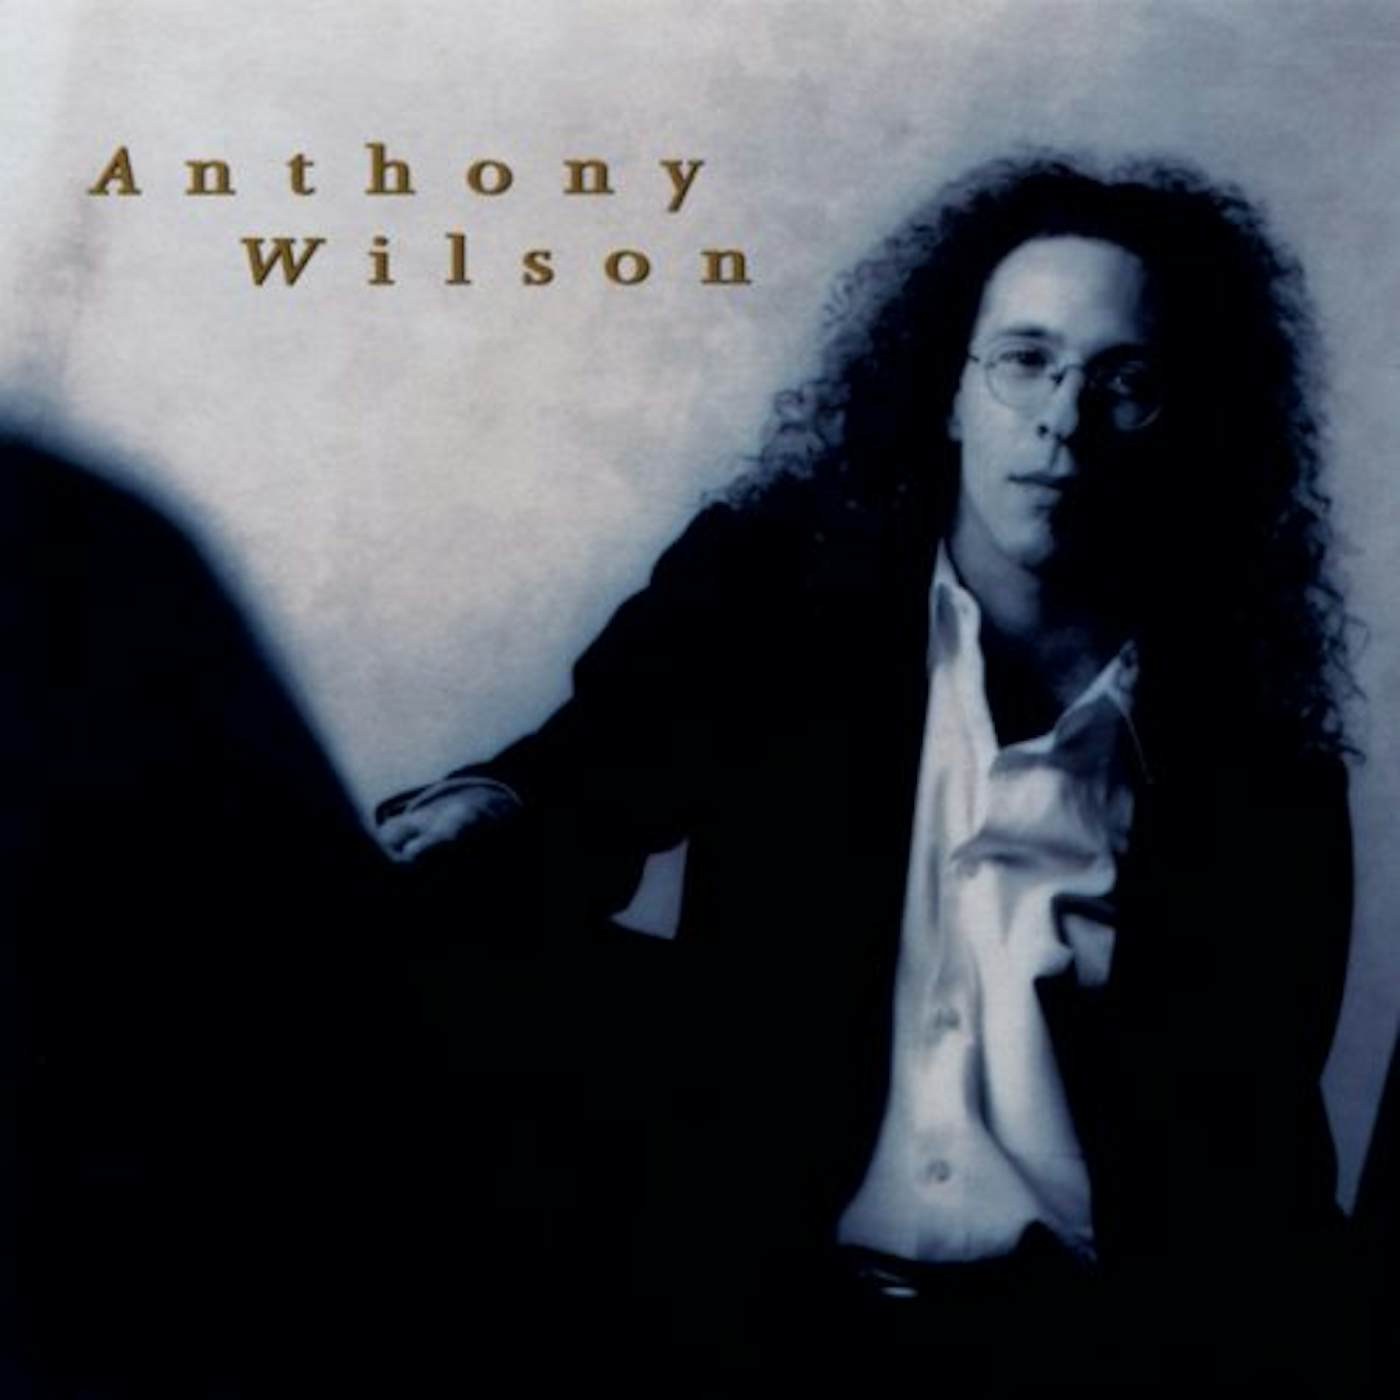 ANTHONY WILSON CD